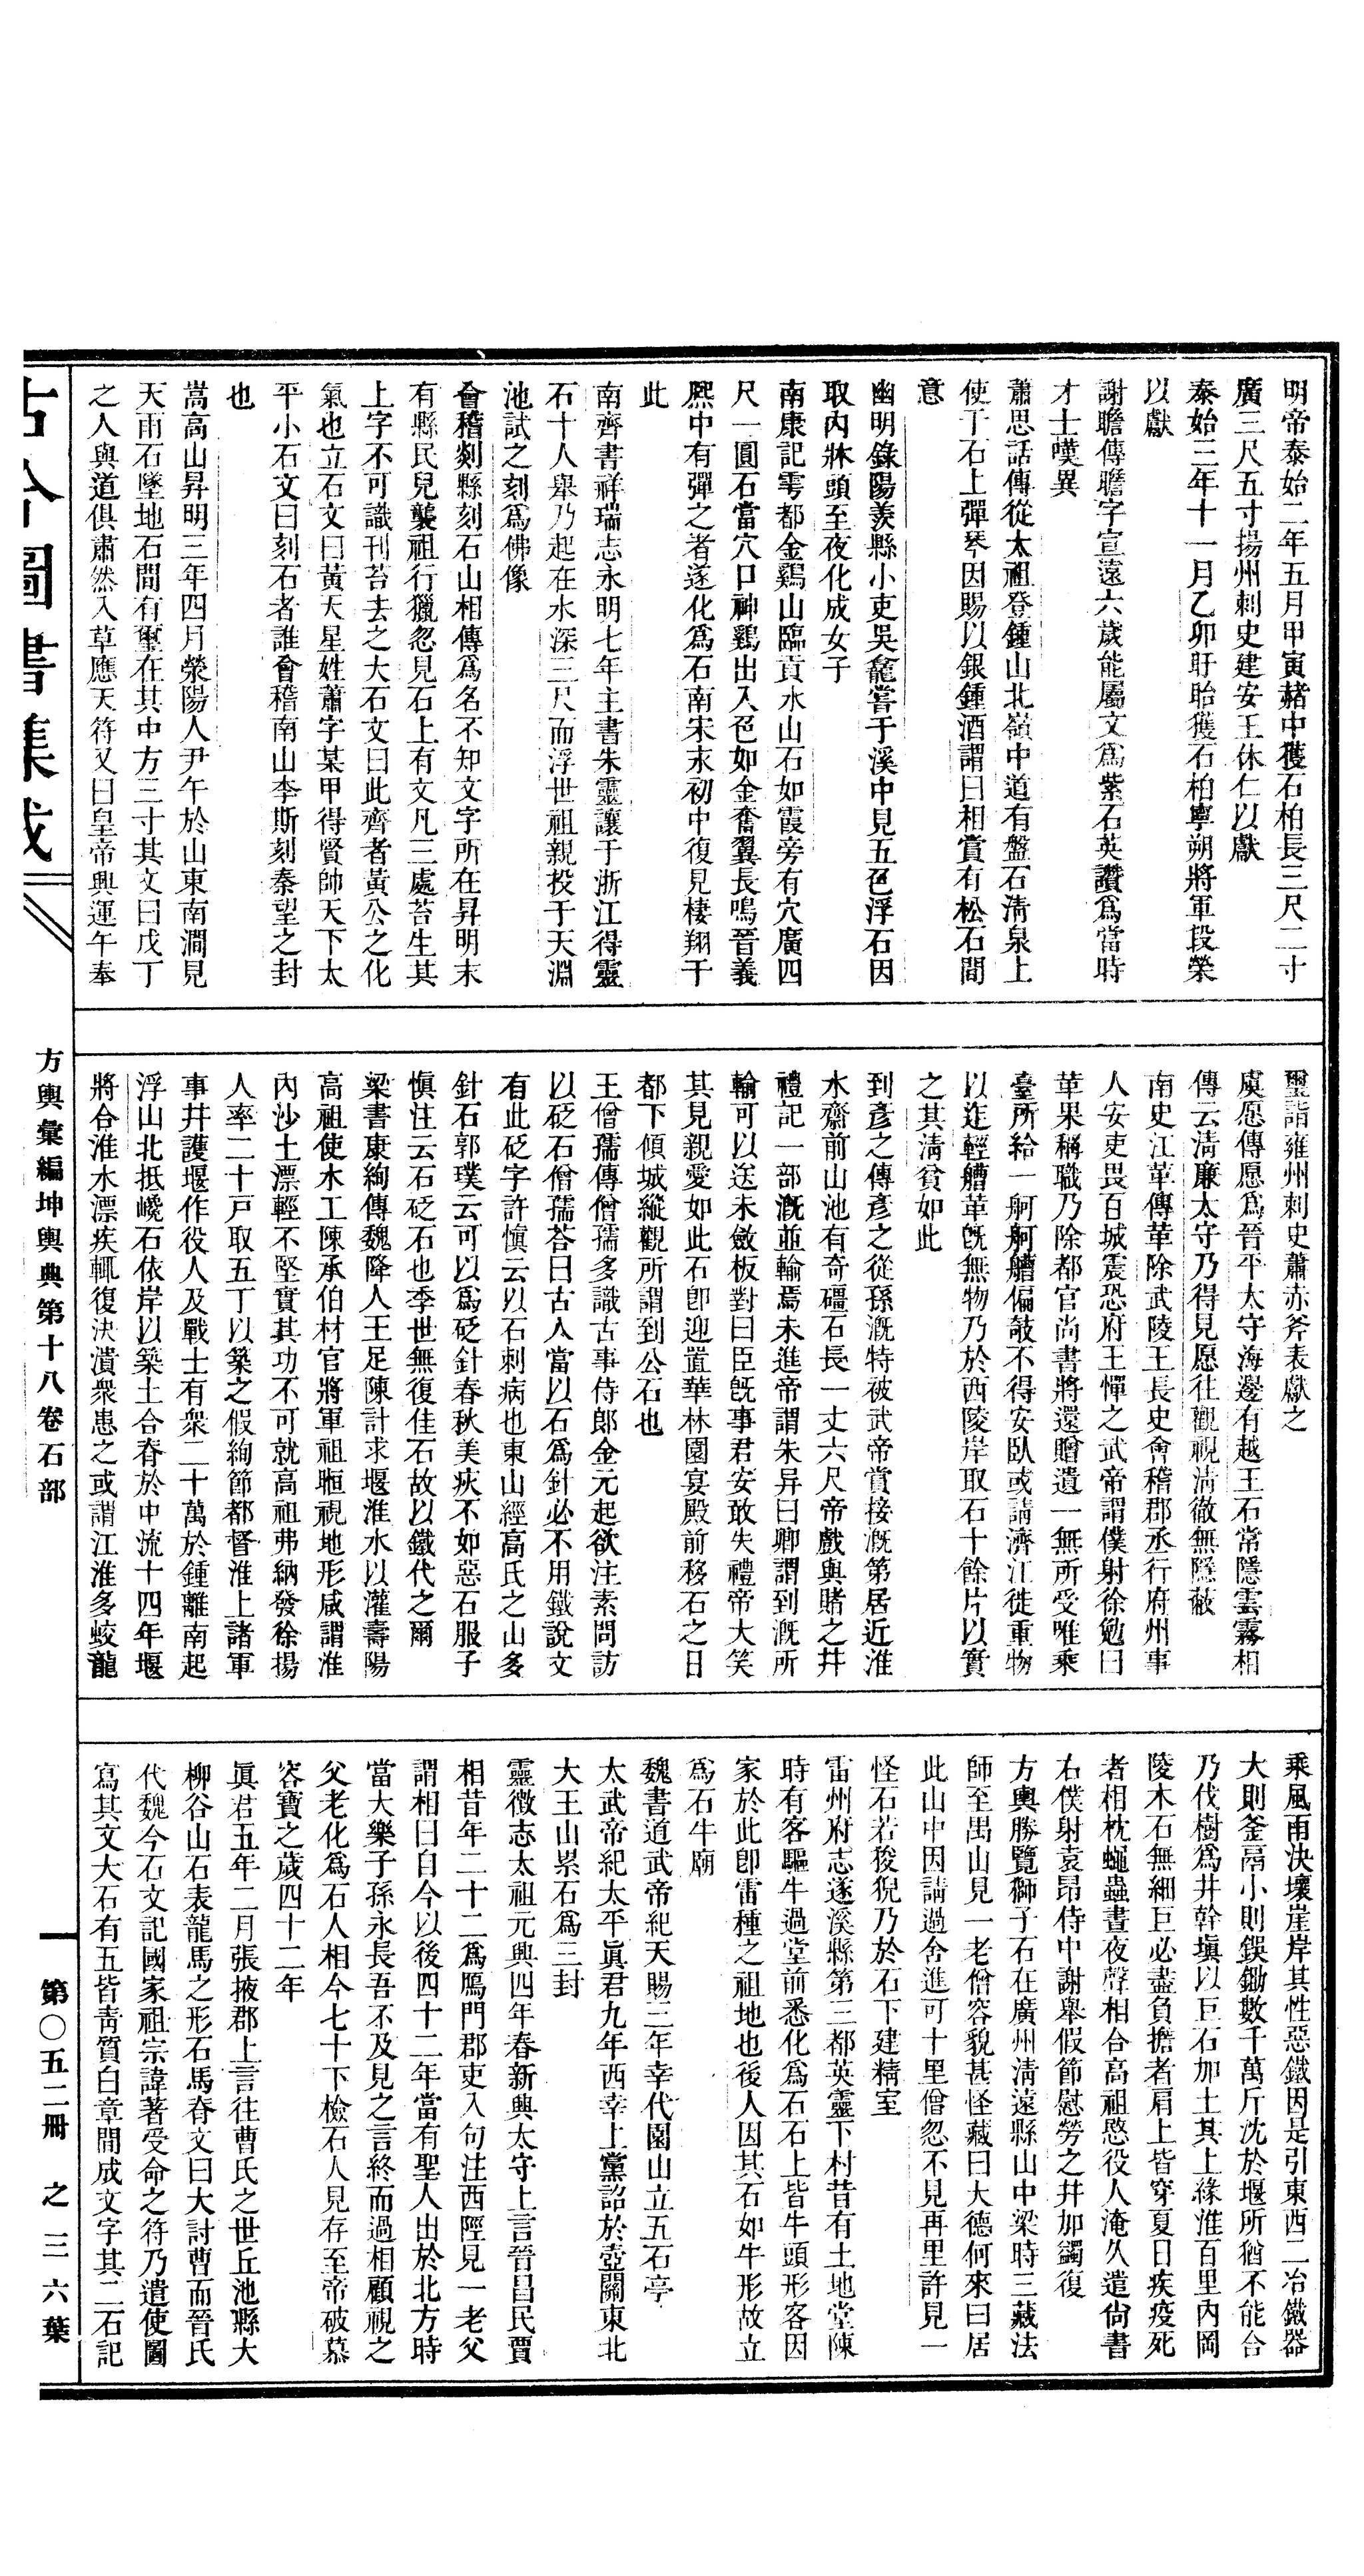 Page Gujin Tushu Jicheng Volume 052 1700 1725 Djvu 72 维基文库 自由的图书馆